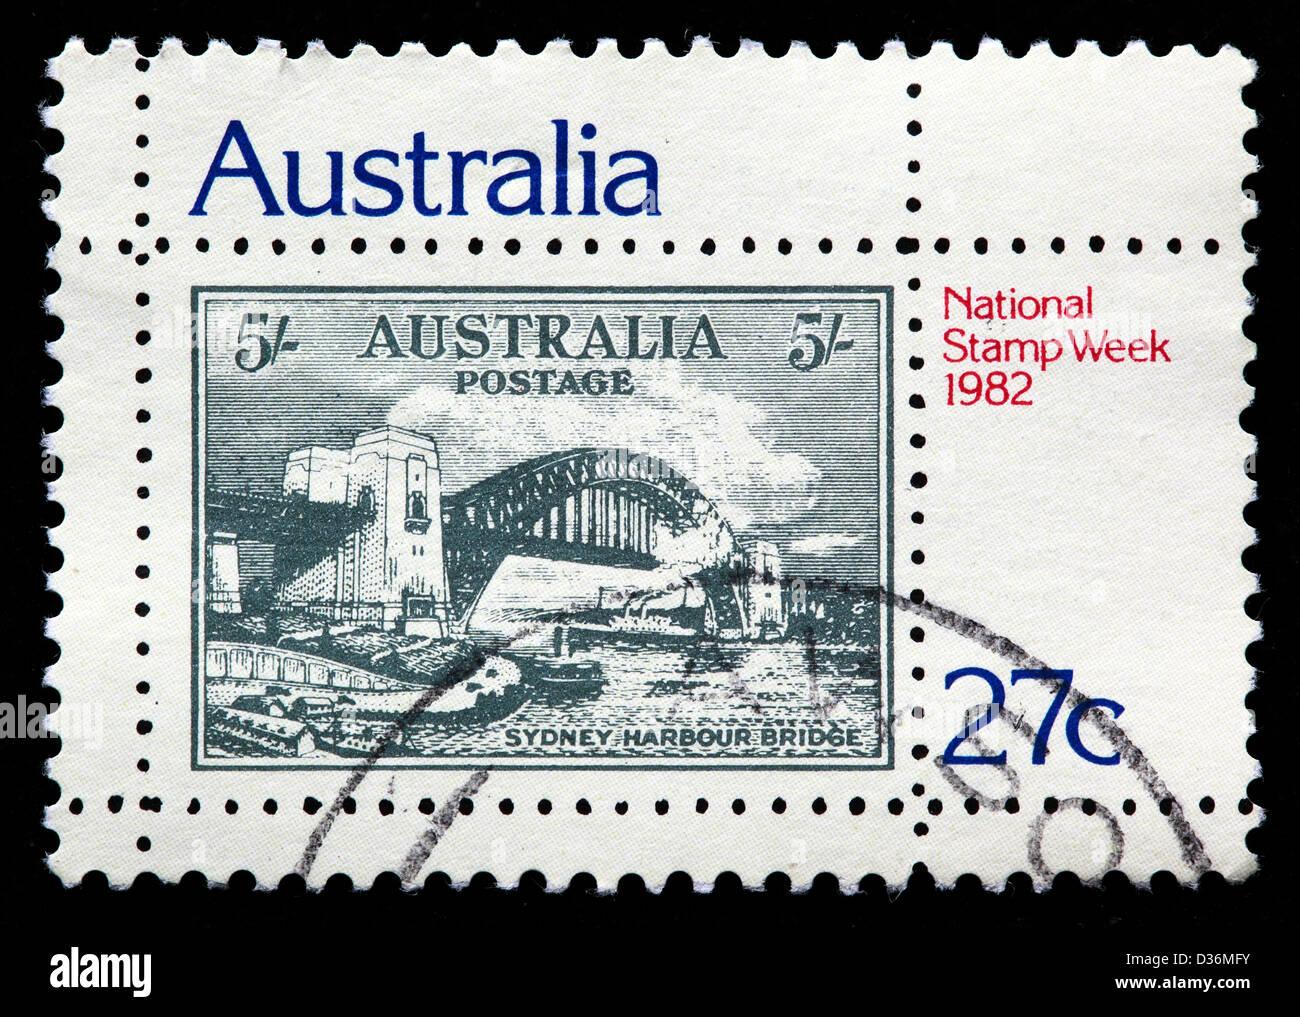 National Stamp week, postage stamp, Australia, 1982 Stock Photo